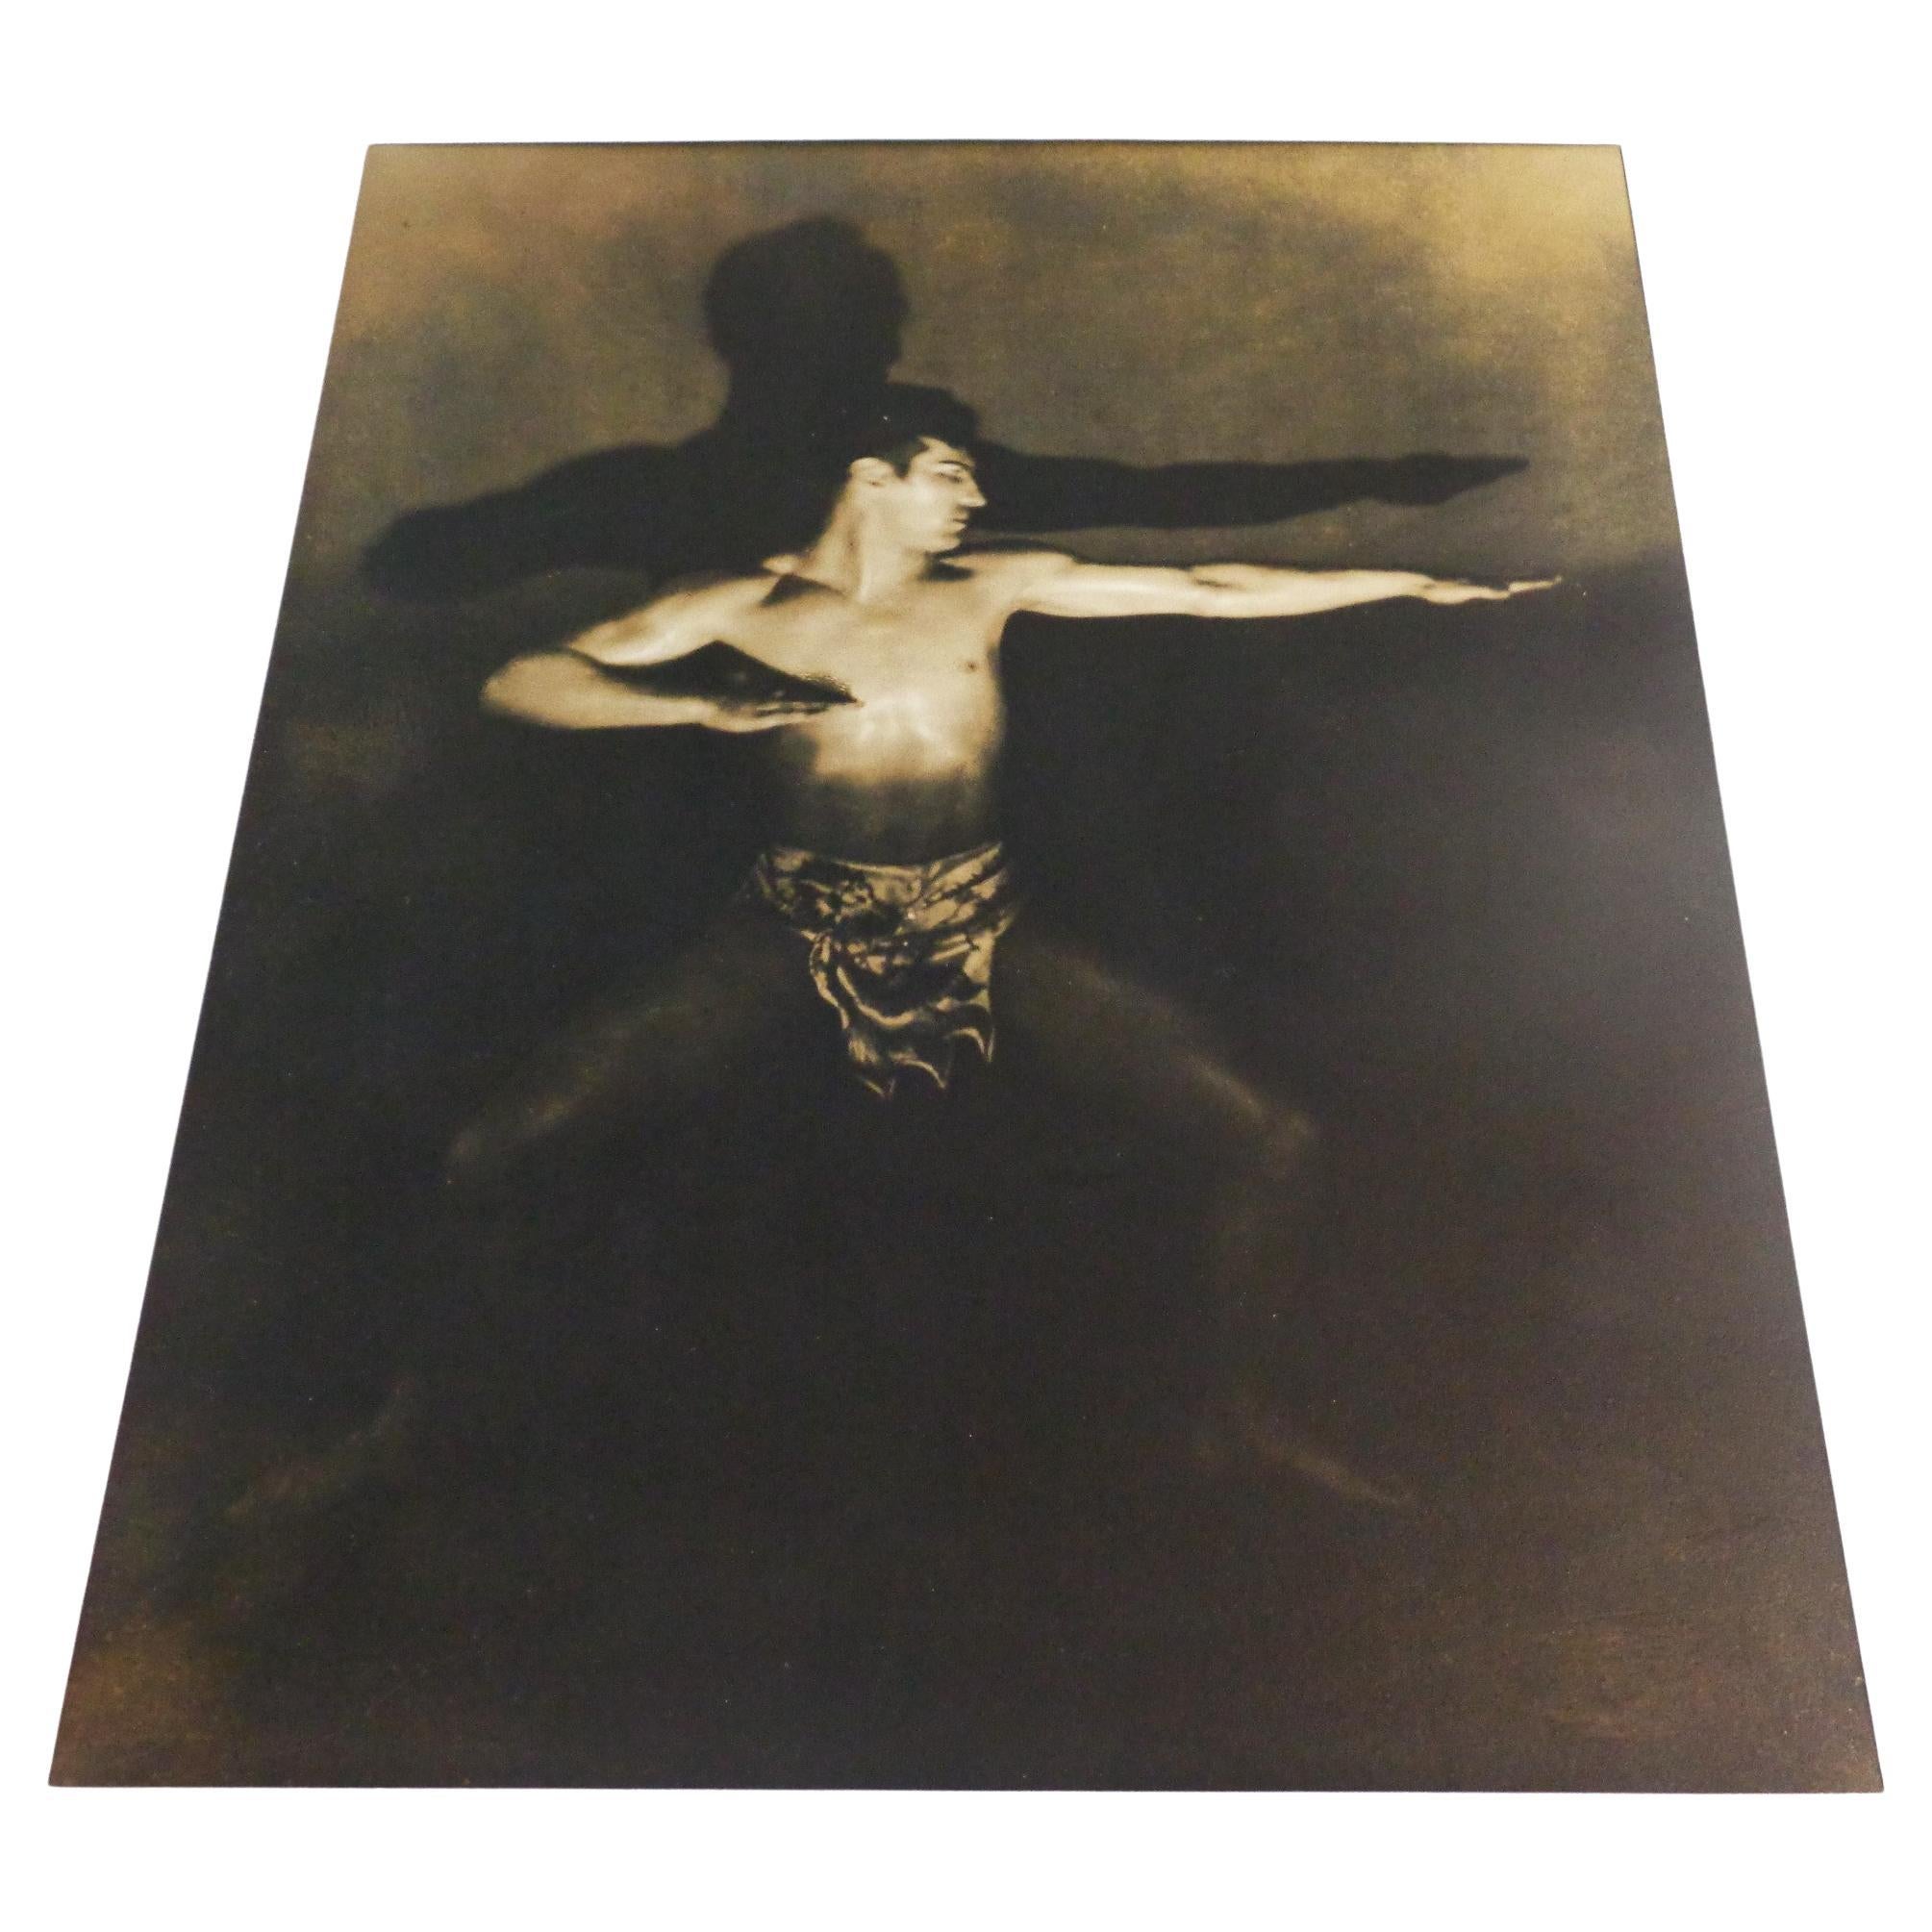 Pictorialist Sepia Tone Gelatin Silver Print Photograph Male Nude, 1900-1910